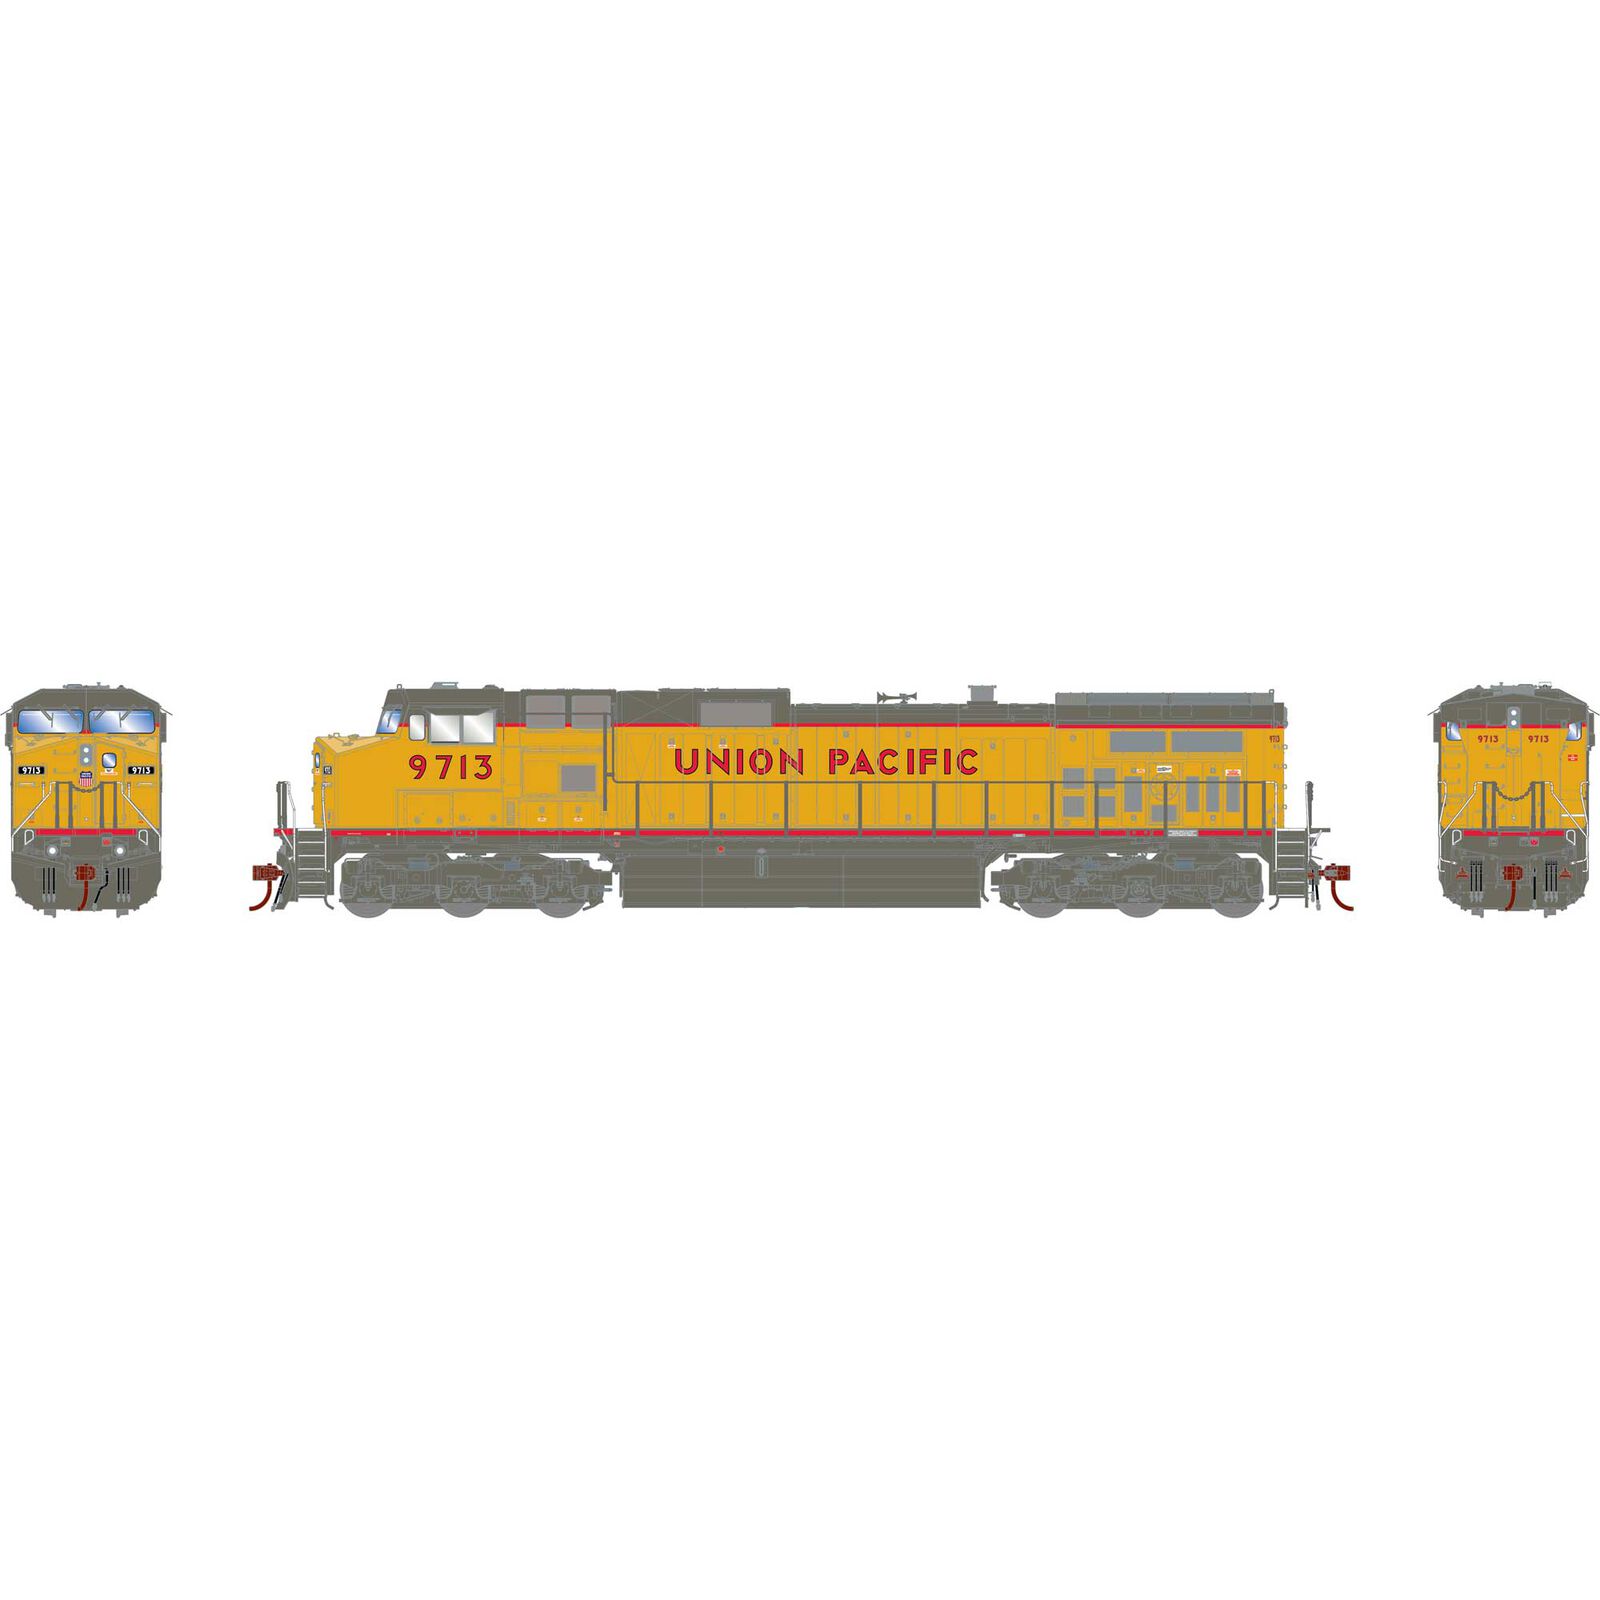 HO Dash 9-44CW Locomotive with DCC & Sound, UP #9713